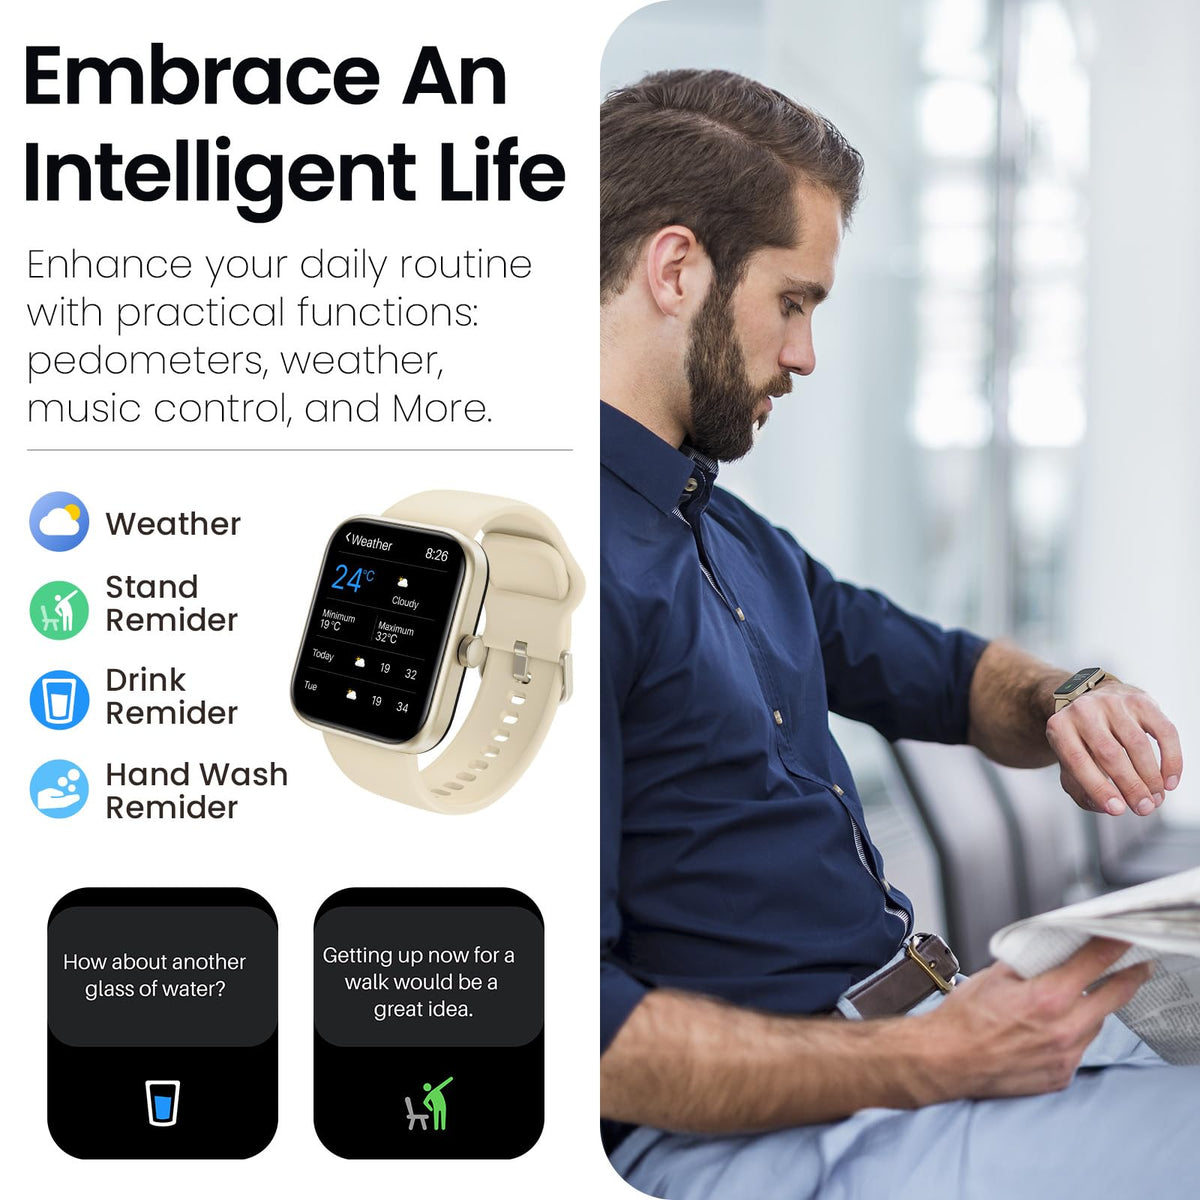 TOZO S3 Ultimate Smart Watch